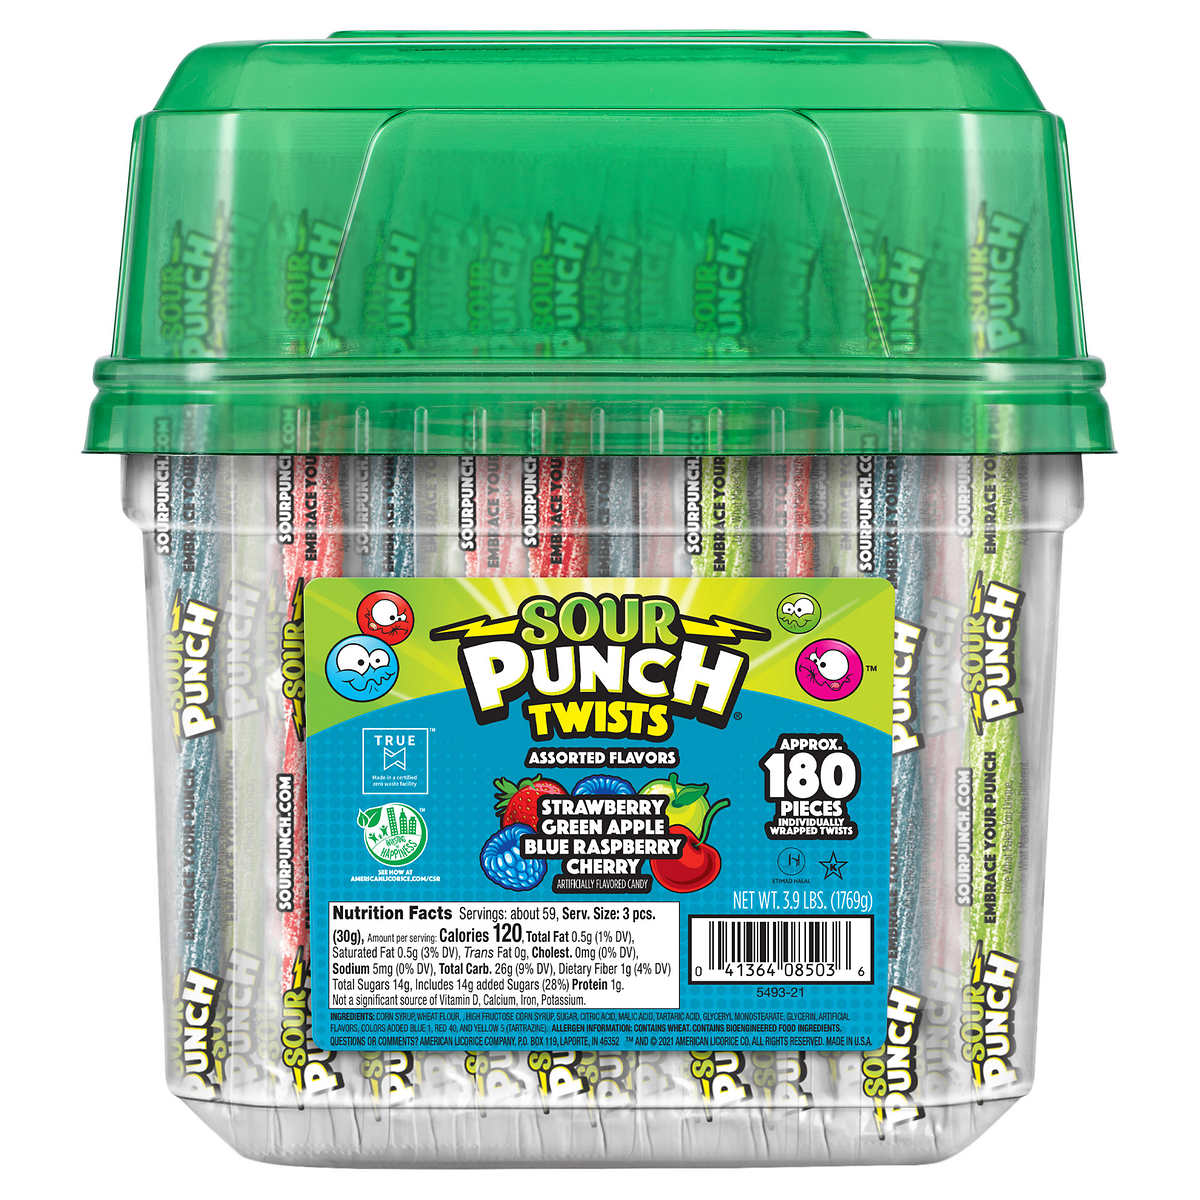 Purchase Wholesale tumbler straw topper. Free Returns & Net 60